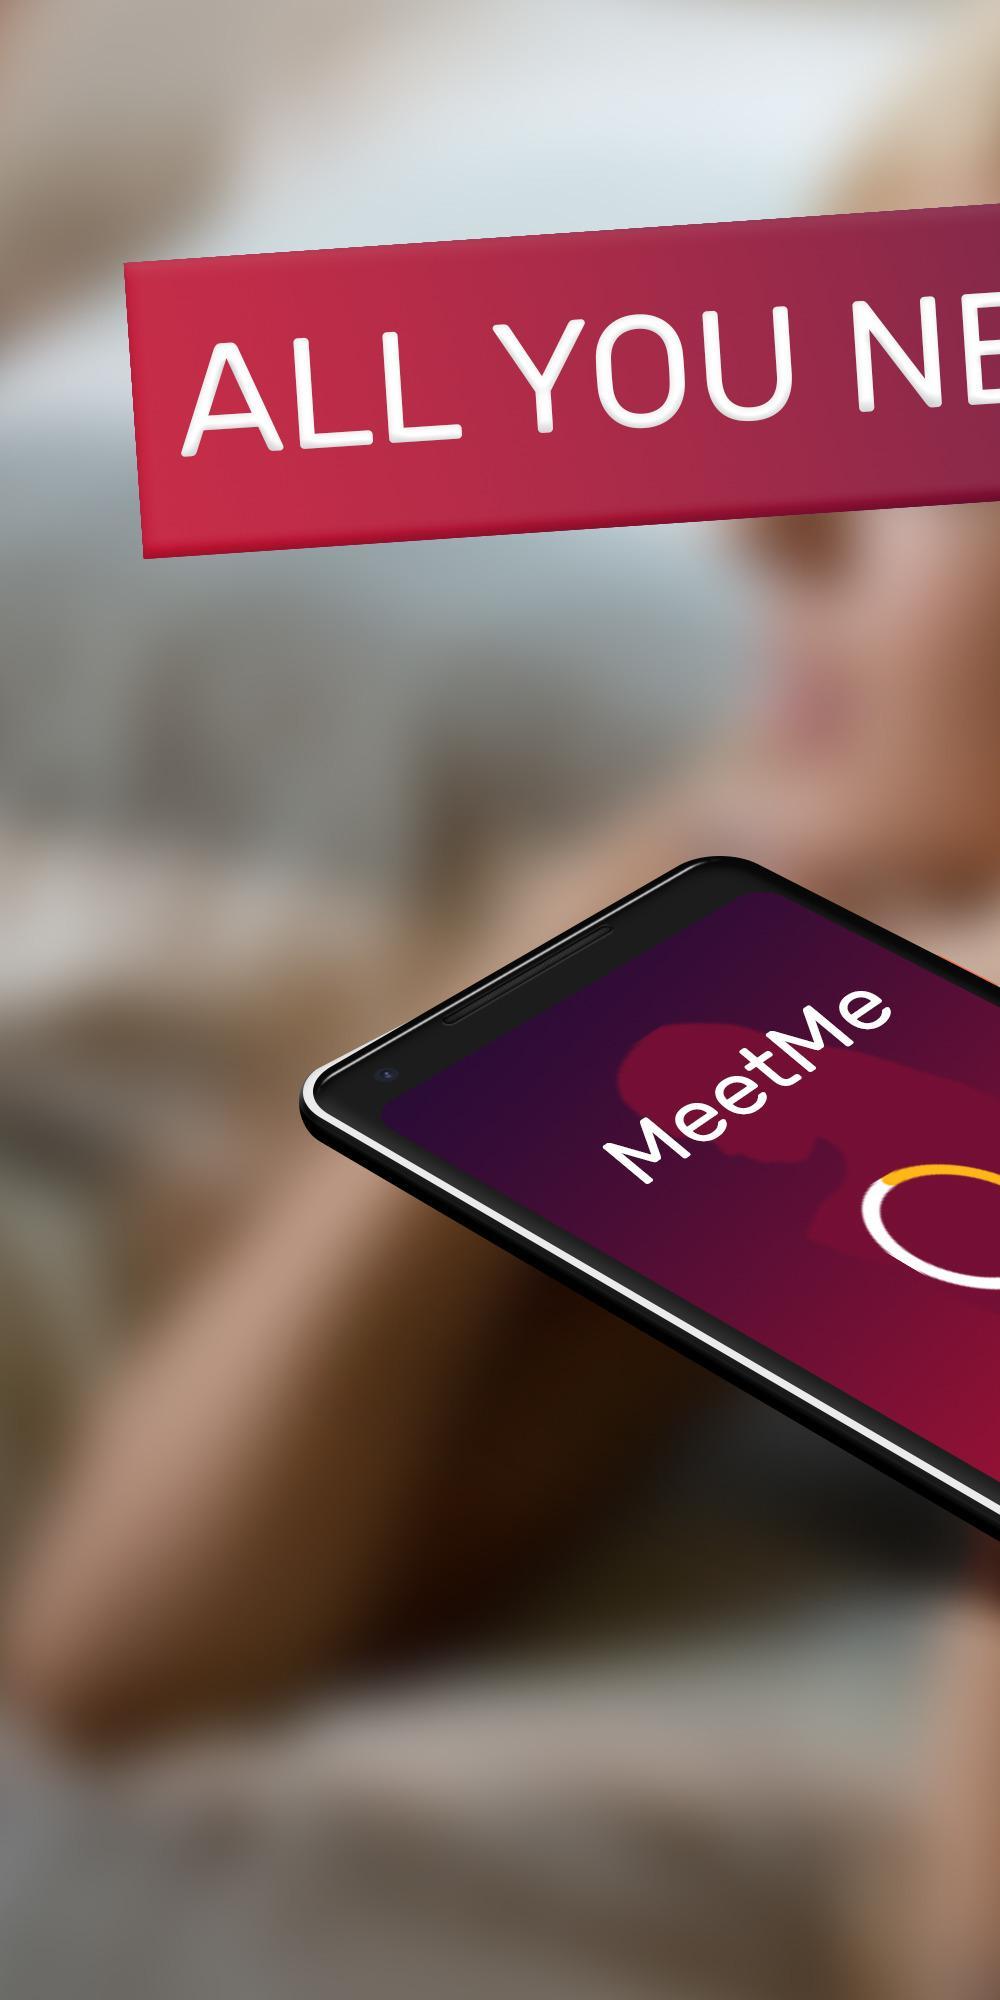 meetme app download free